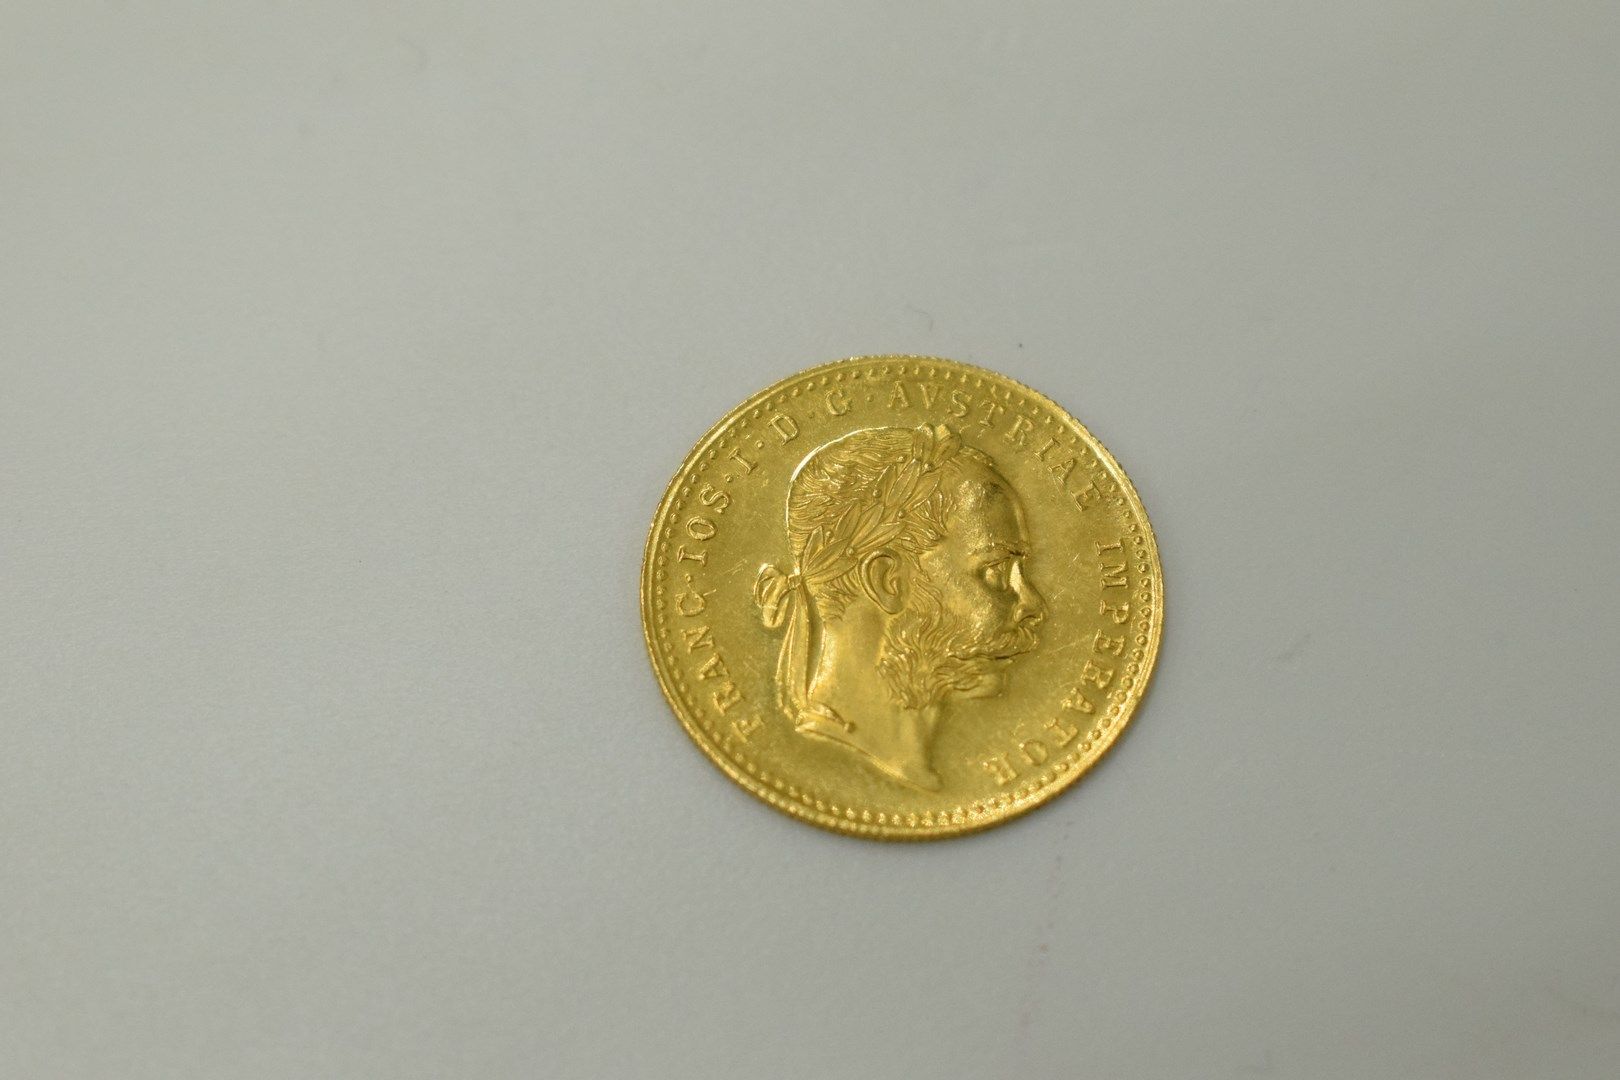 Null Moneta d'oro da 1 ducato Francesco I (1915)
Peso: 3,4 g.